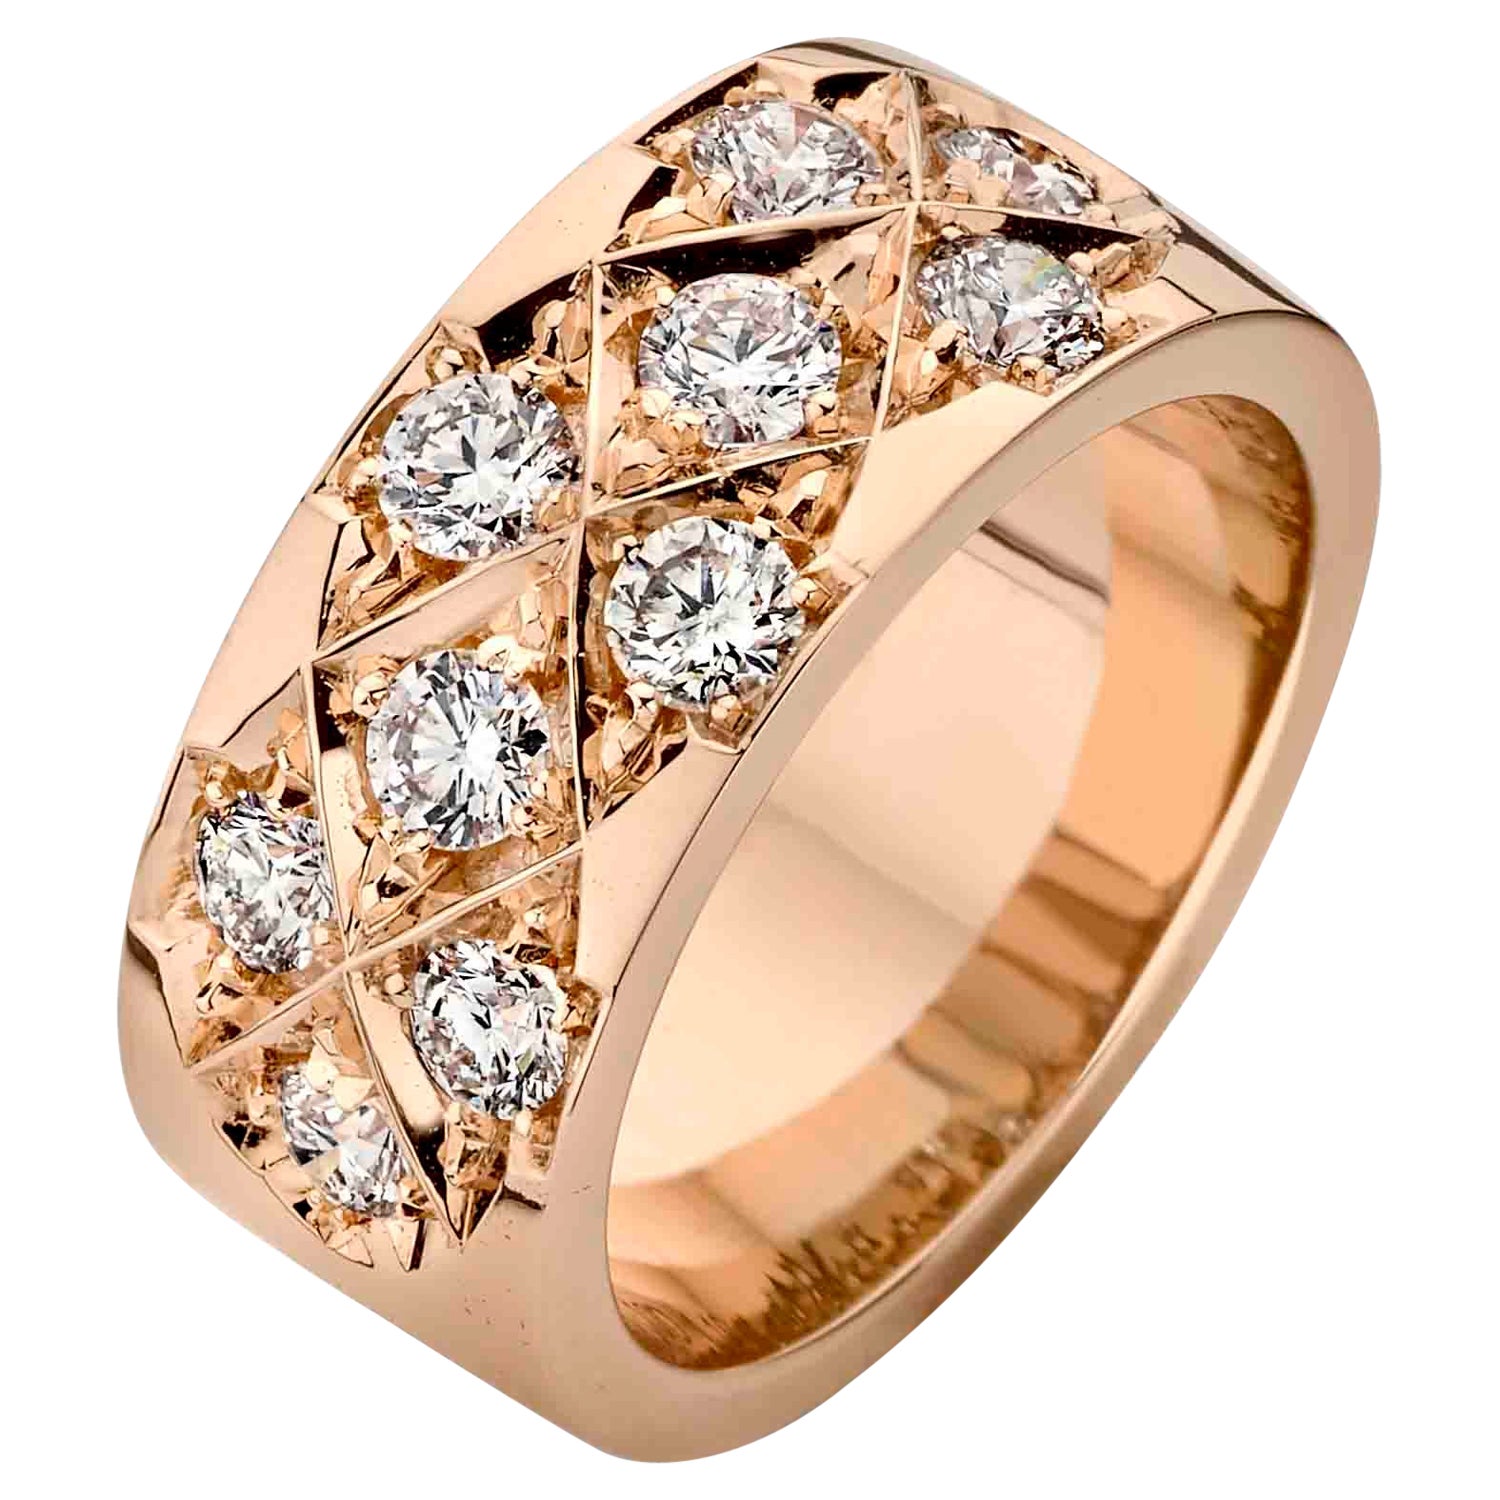 18 Kt Rose Gold 0.6 Carat Collection Grade Diamond Wedding Ring by Jochen Leën For Sale